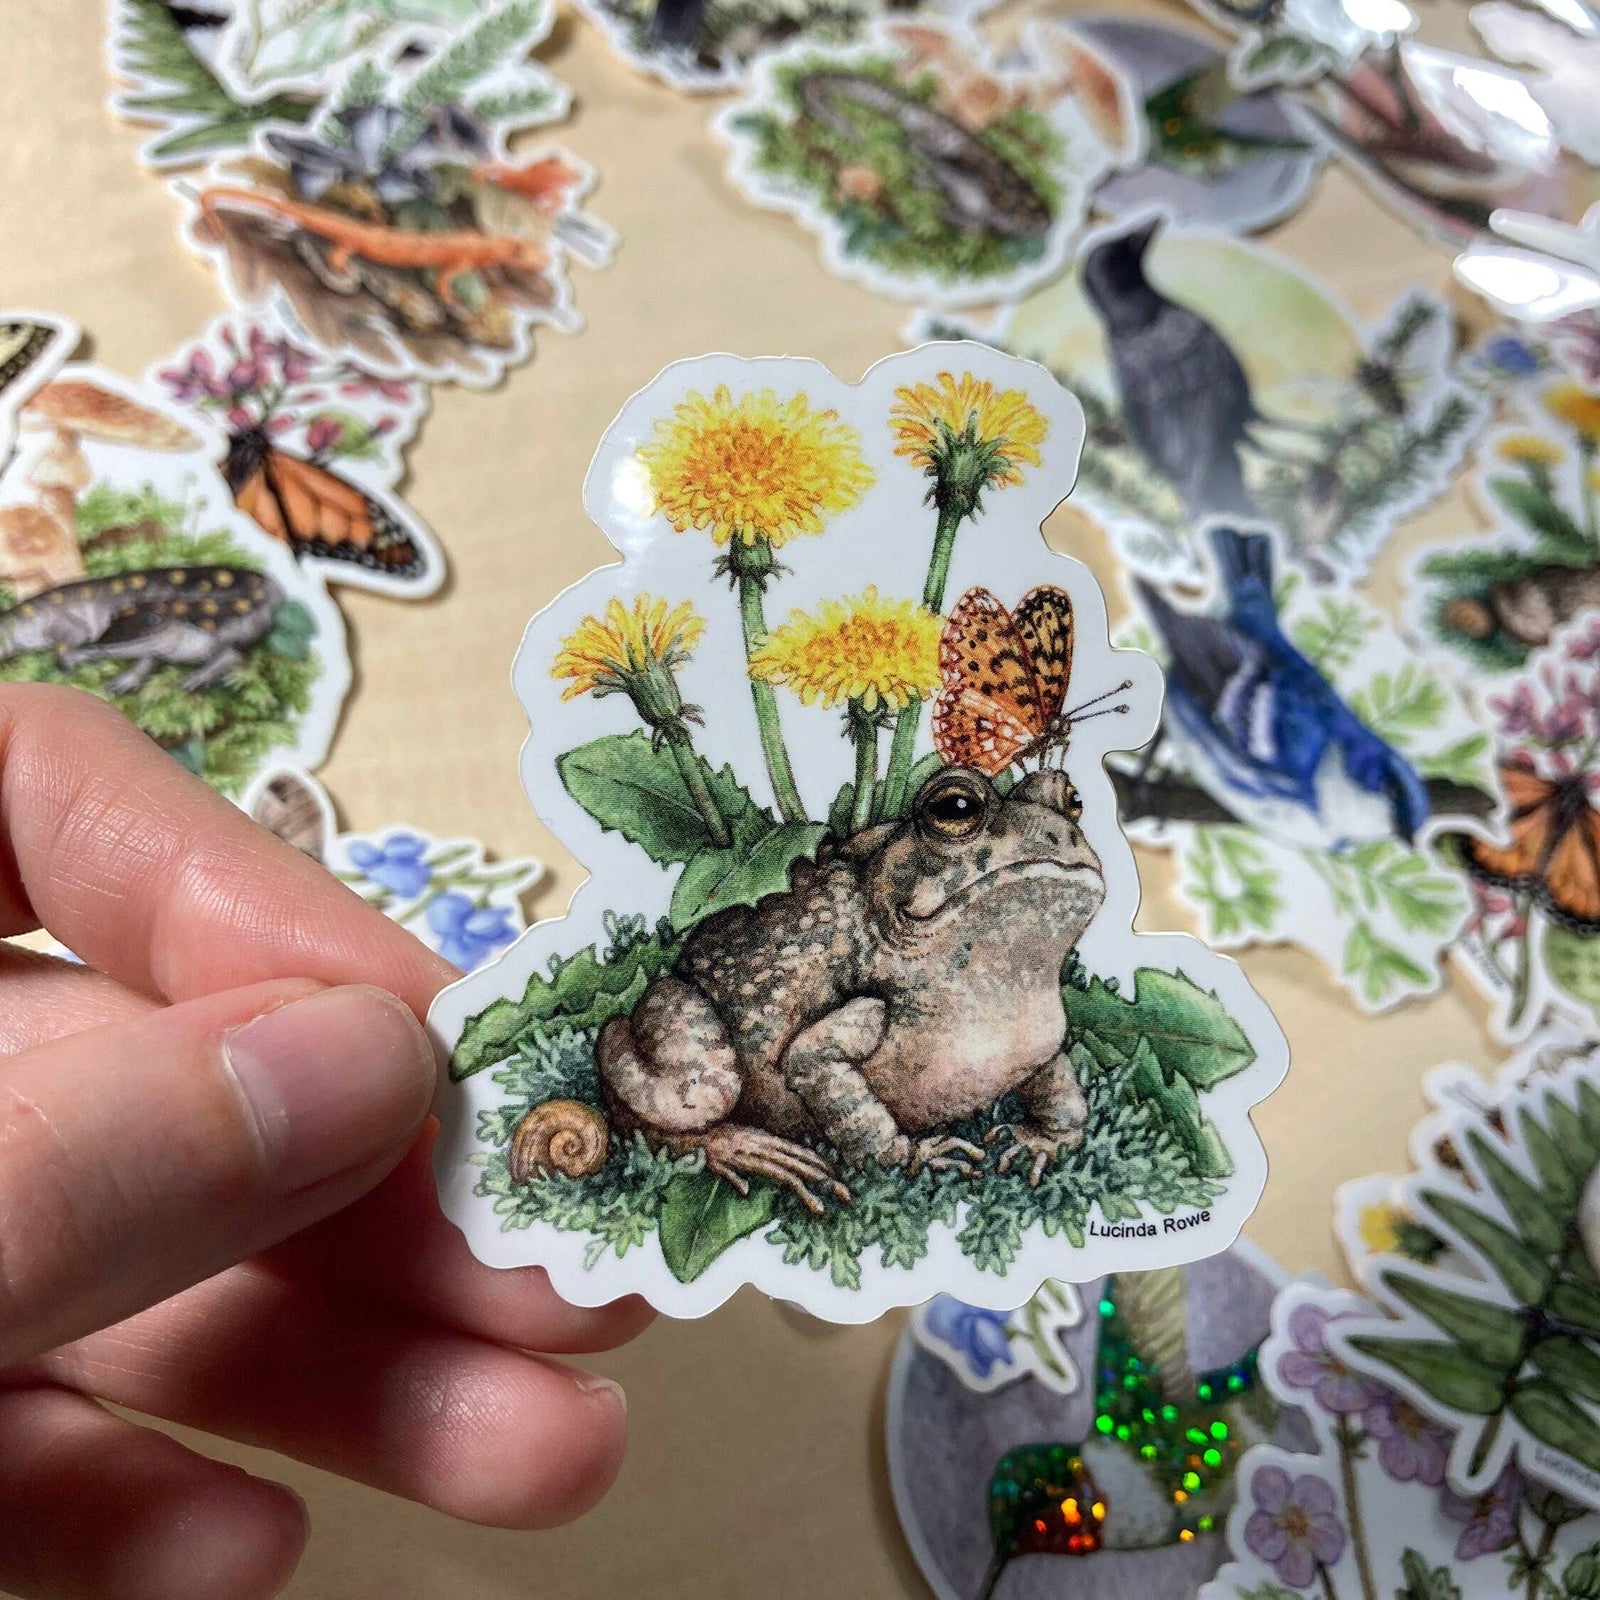 Luna Moth Sticker - Wild Roots Apothecary